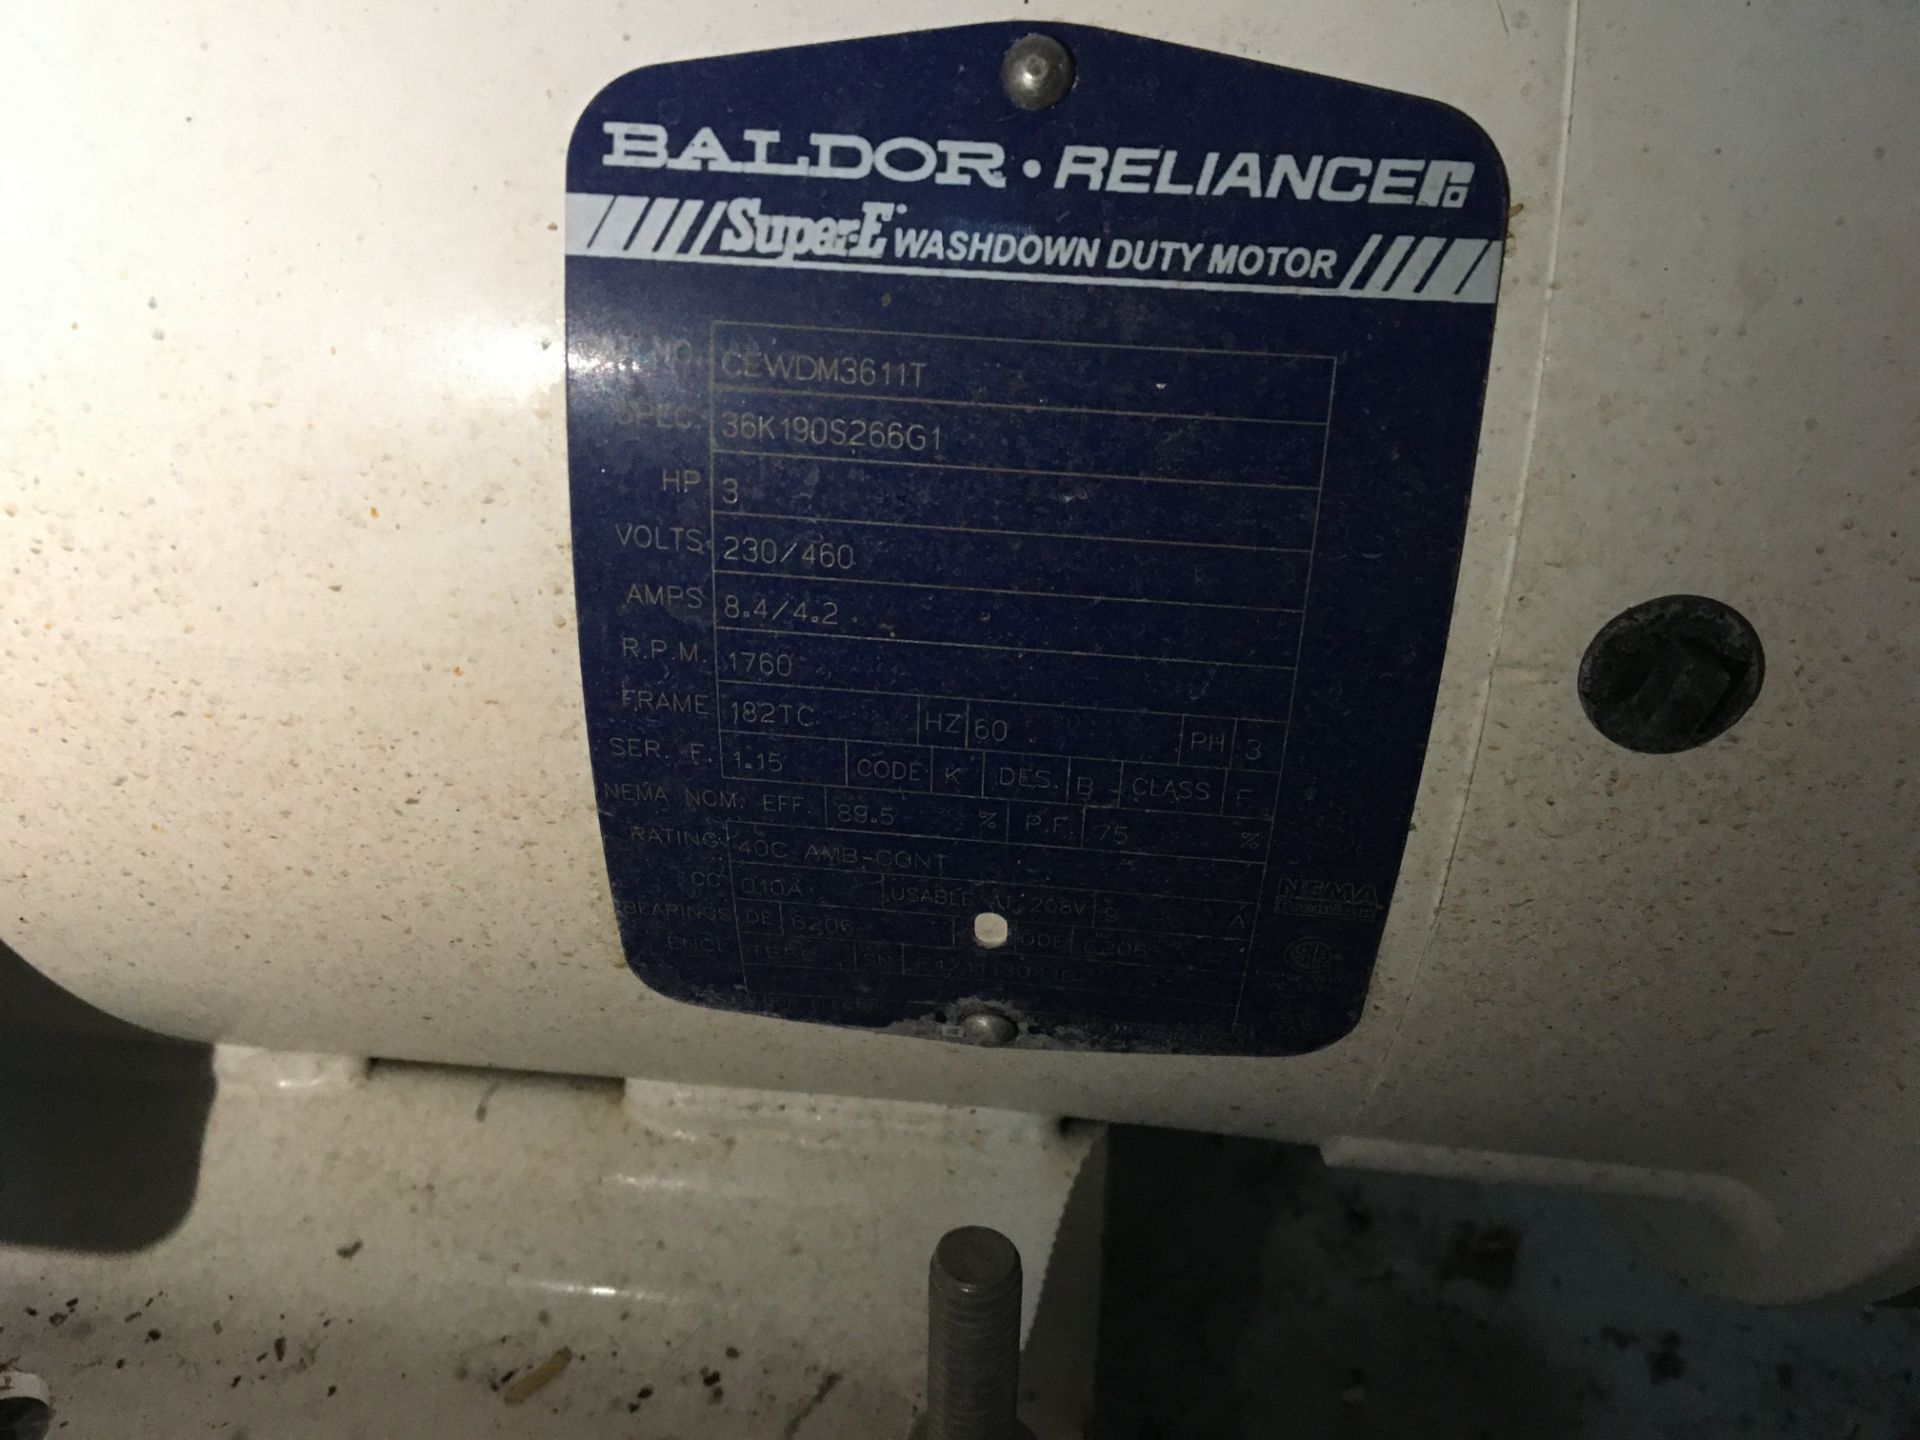 4 ea. Baldor-Reliance 3 HP Motors, Model 36K190S266G1, Serial Number F1711130515, F1711130410, - Image 16 of 27